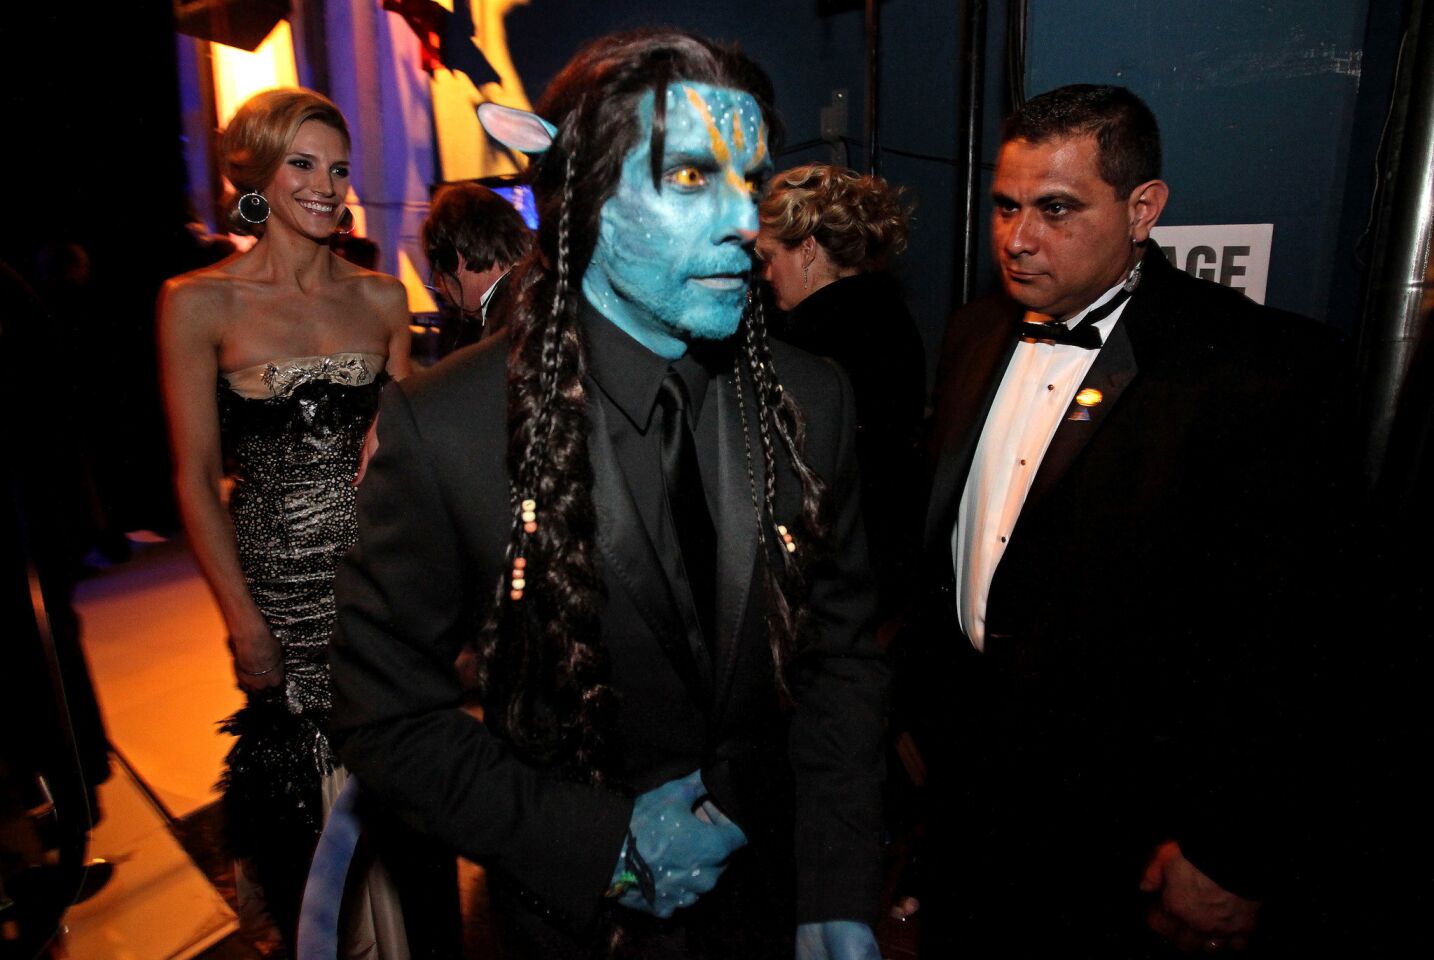 Actor Ben Stiller, as an Avatar blue man, backstage before an award presentation at the 82nd Academy Awards at the Kodak Theatre.